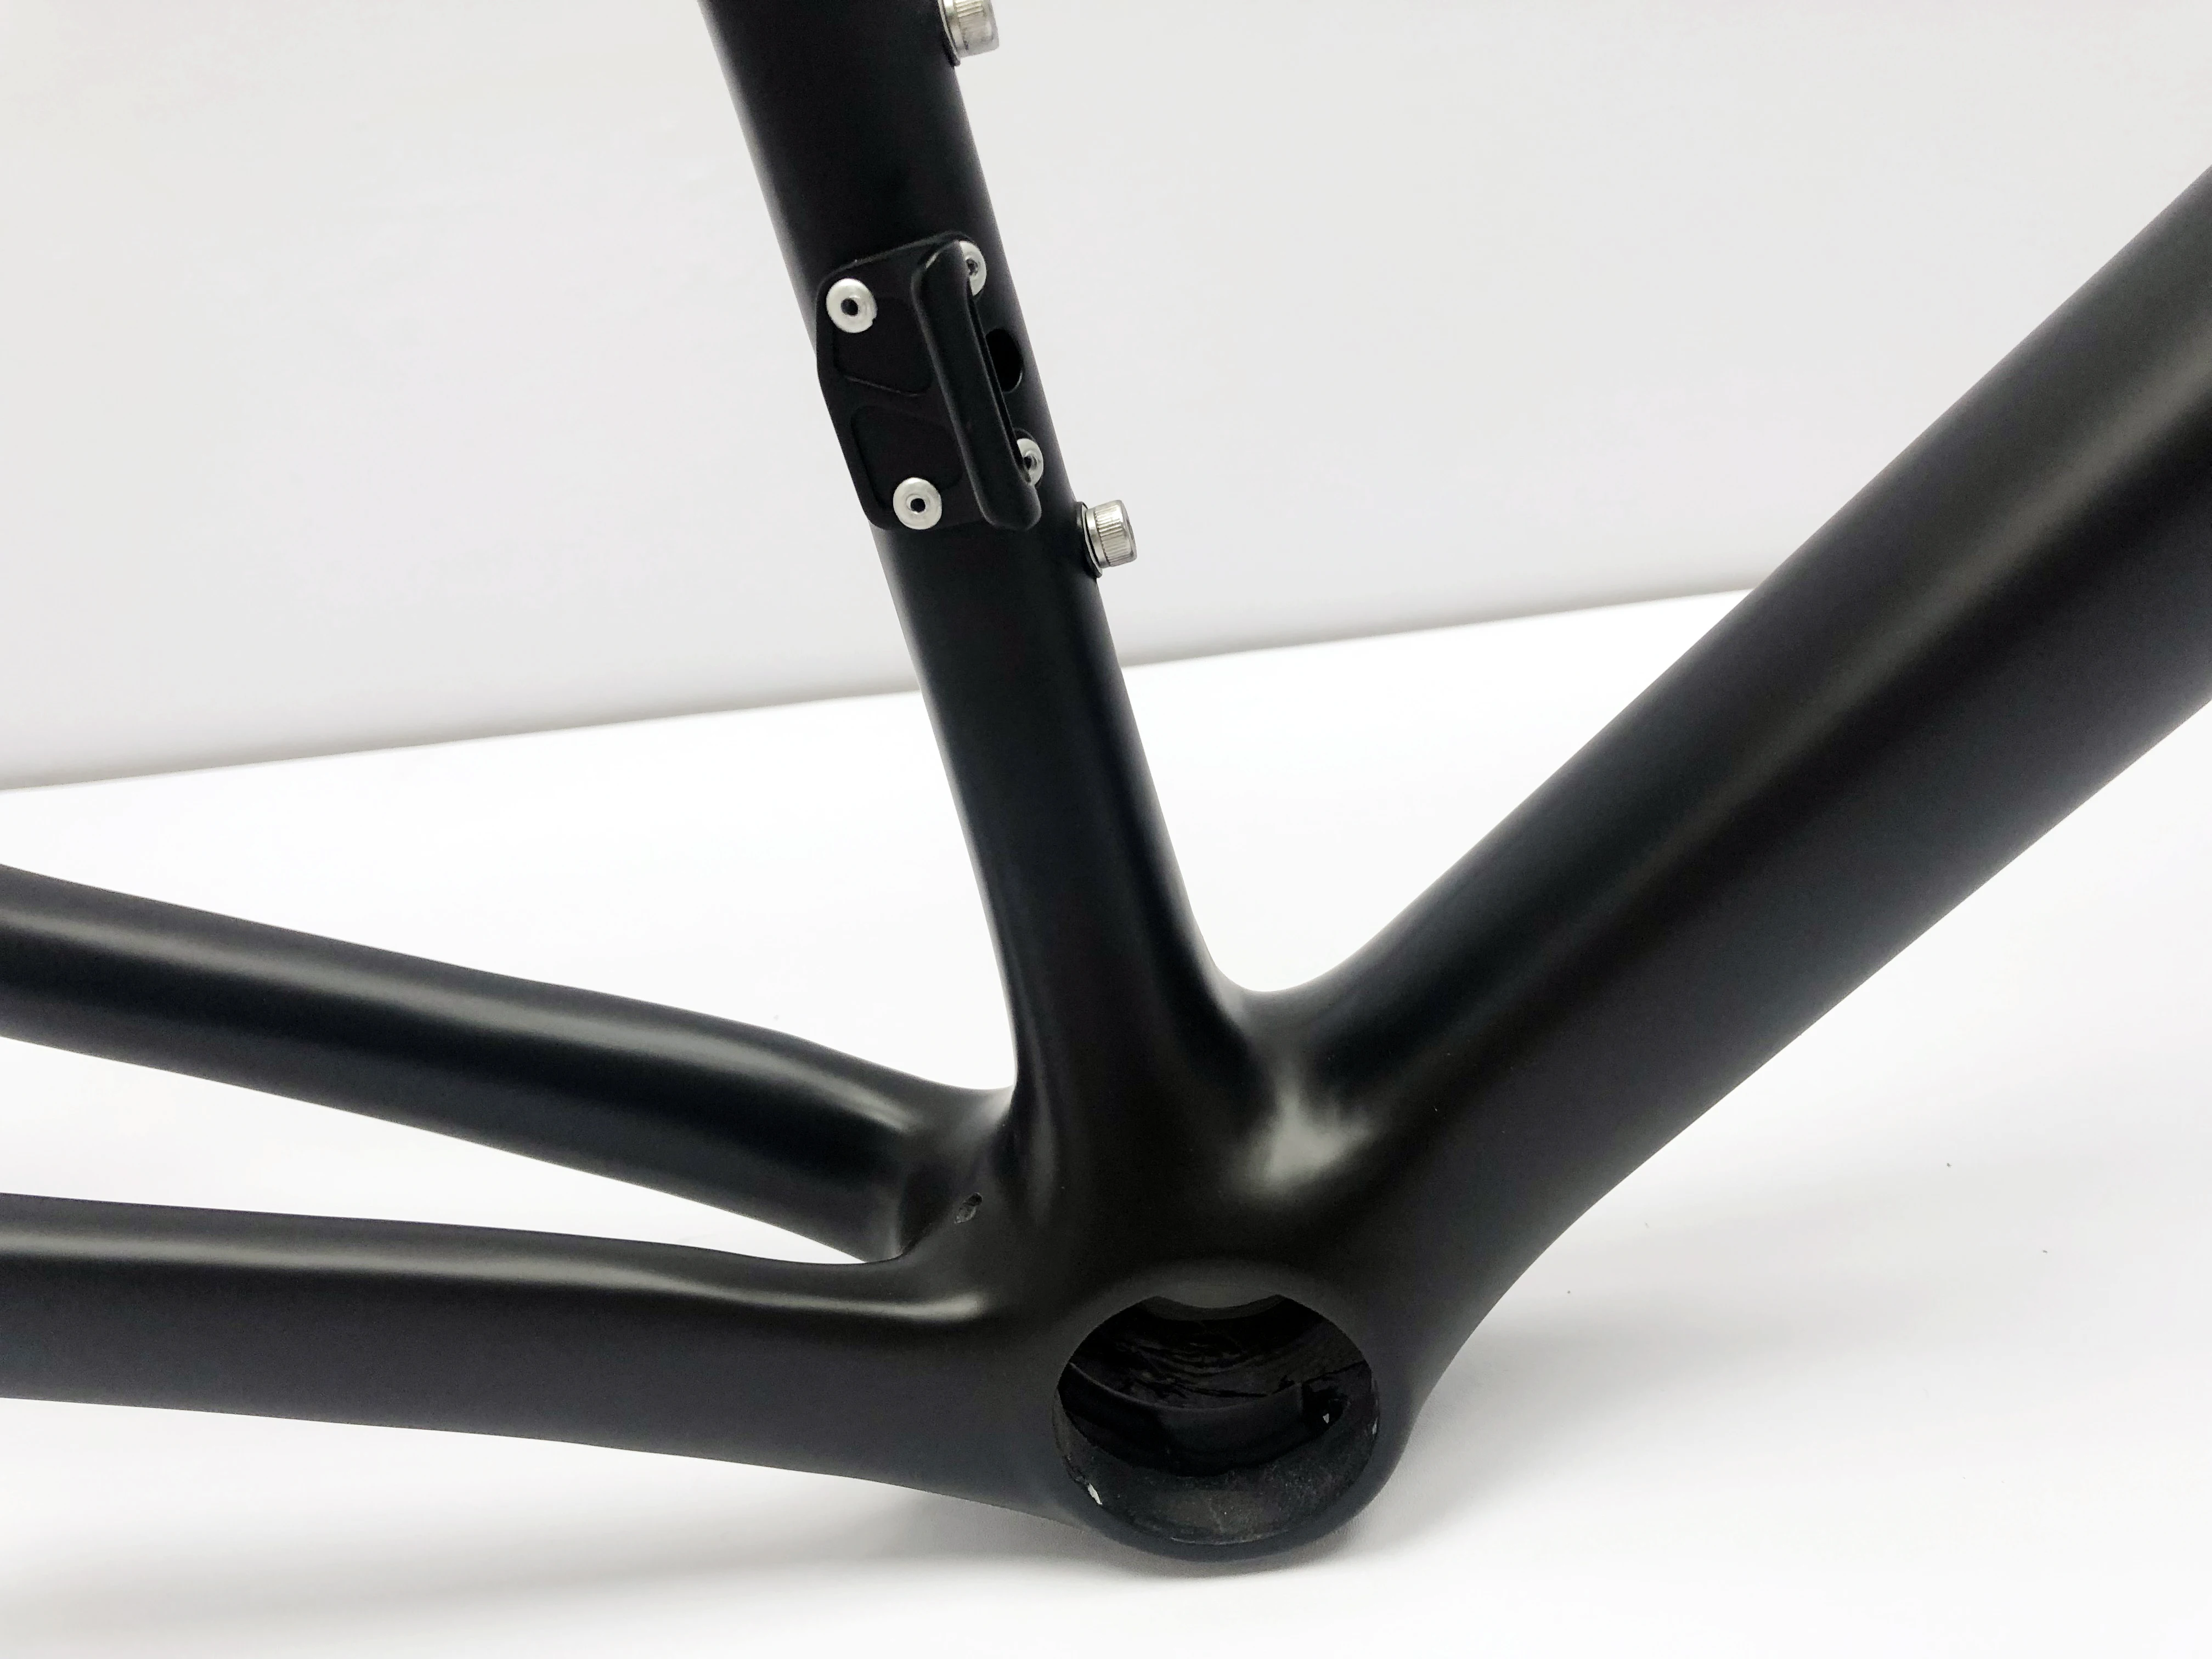 Sale 2019 Ceccotti carbon road bike frame new design disc brake T1100 carbon bicycle frame gravel bike frameset 2